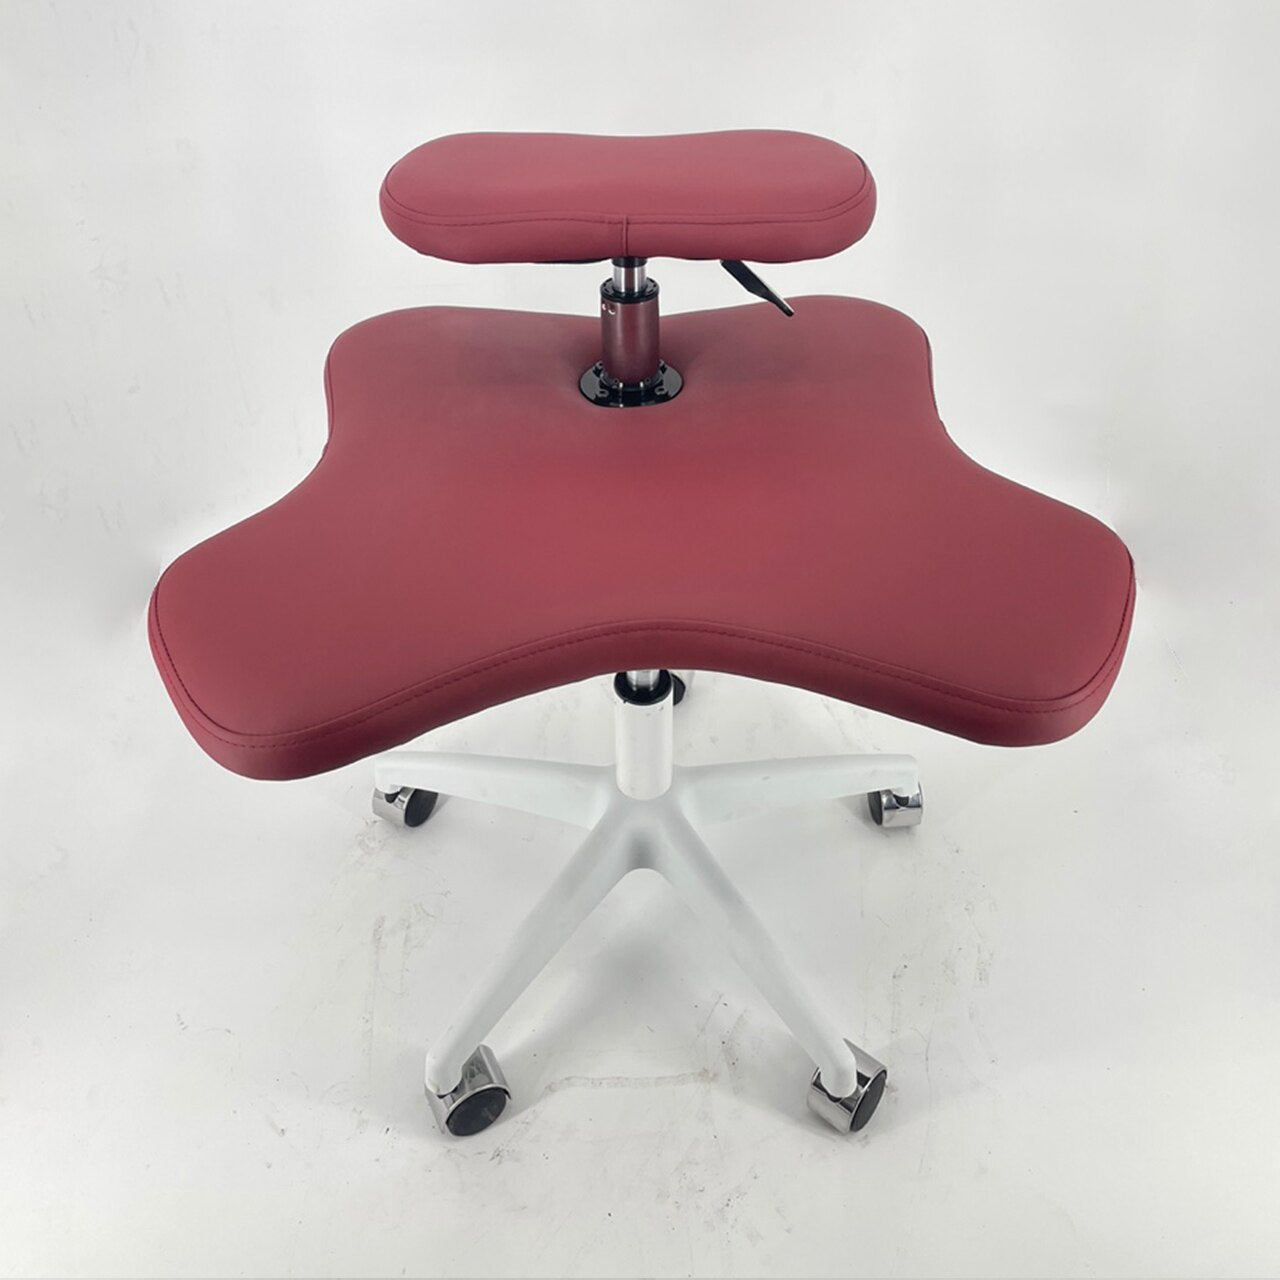 Customized Monkey Stool, Cross-Leg Chair, Easy Chair, No Sitting Stool, Yoga, Squatting, Sitting